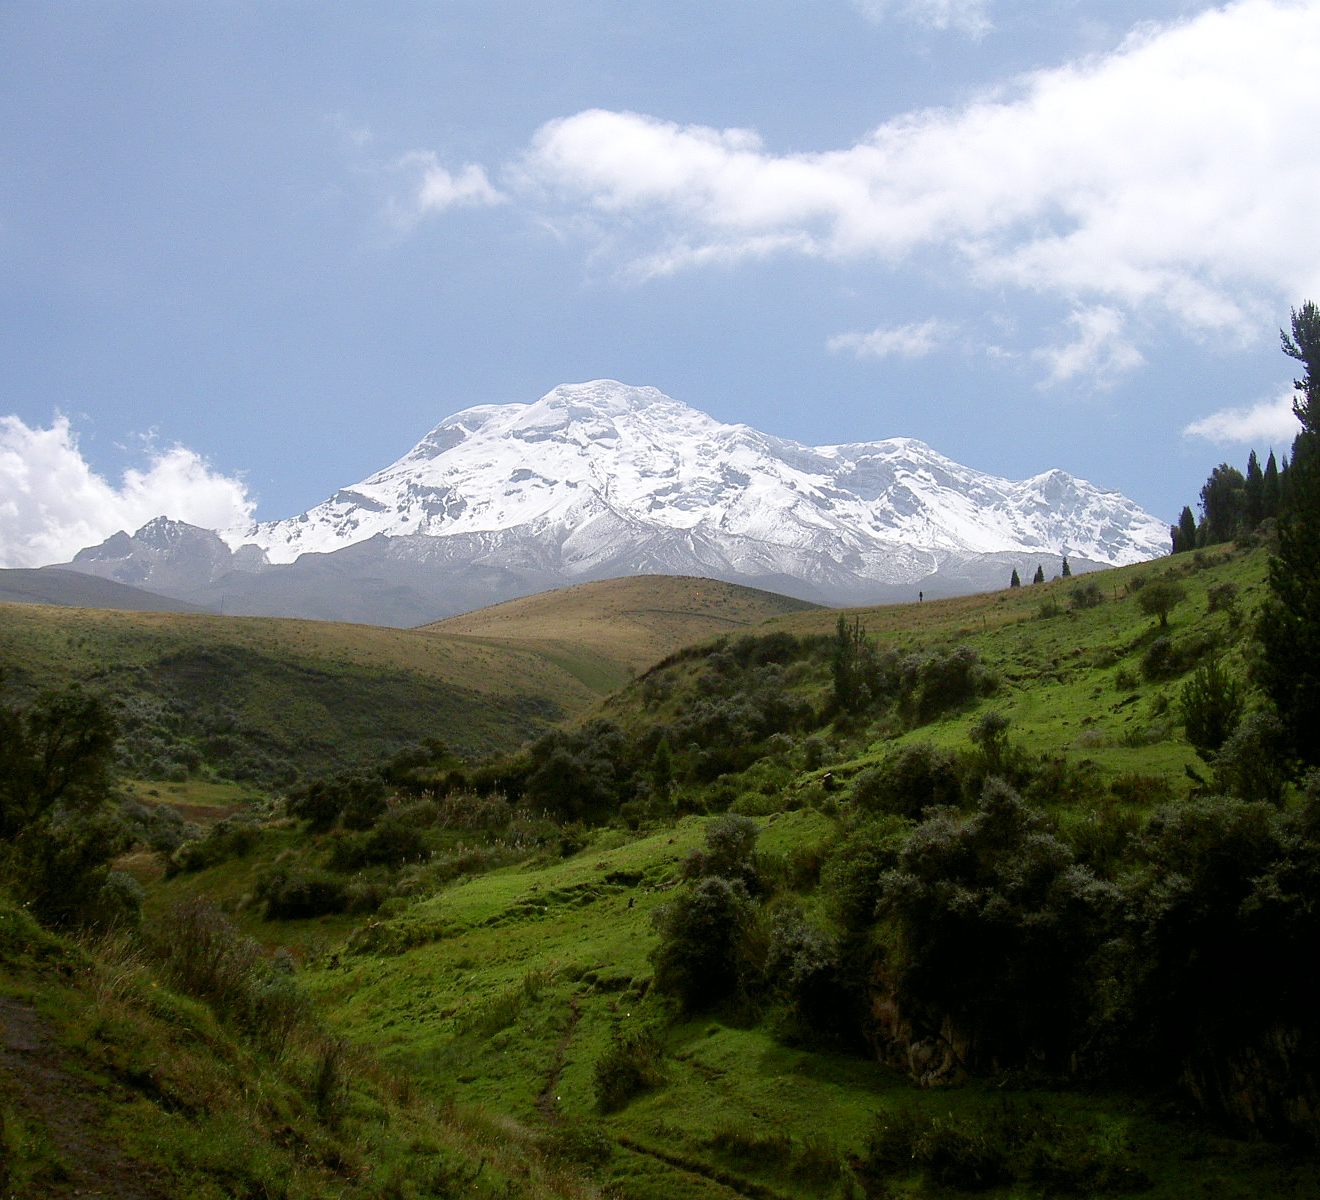 Vrldens hgsta berg, sett genom avstnd frn jordens centrum, Chimborazo i Ecuador.